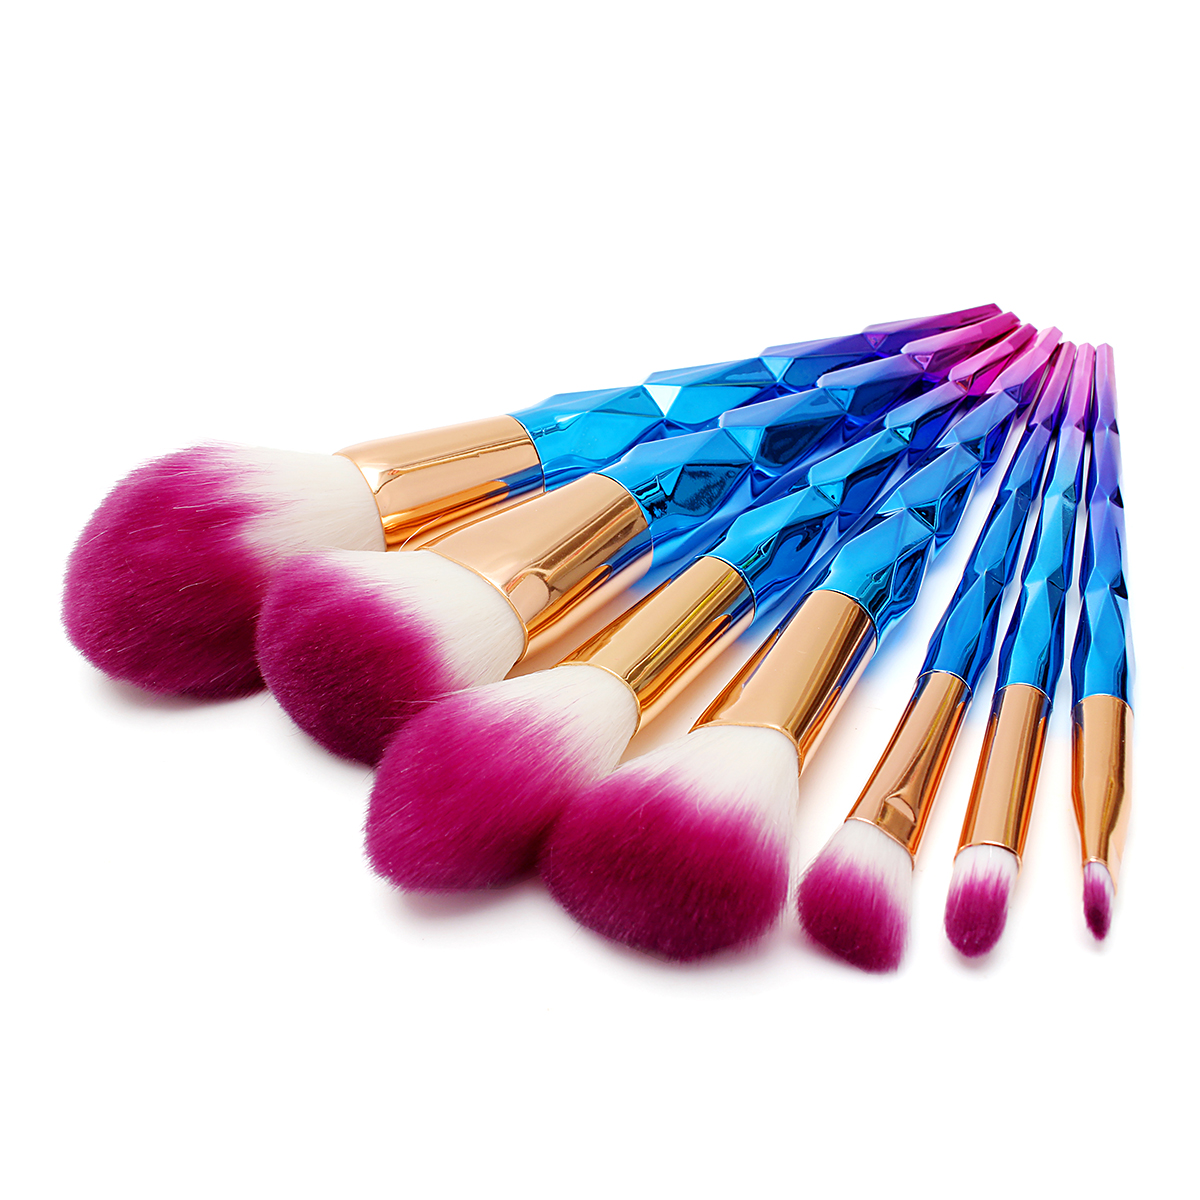 Resultado de imagen para 7pcs Gorgeous Handle Makeup Brushes Cosmetic Tools Loose Powder Blush Highlight Shading Blend Lip